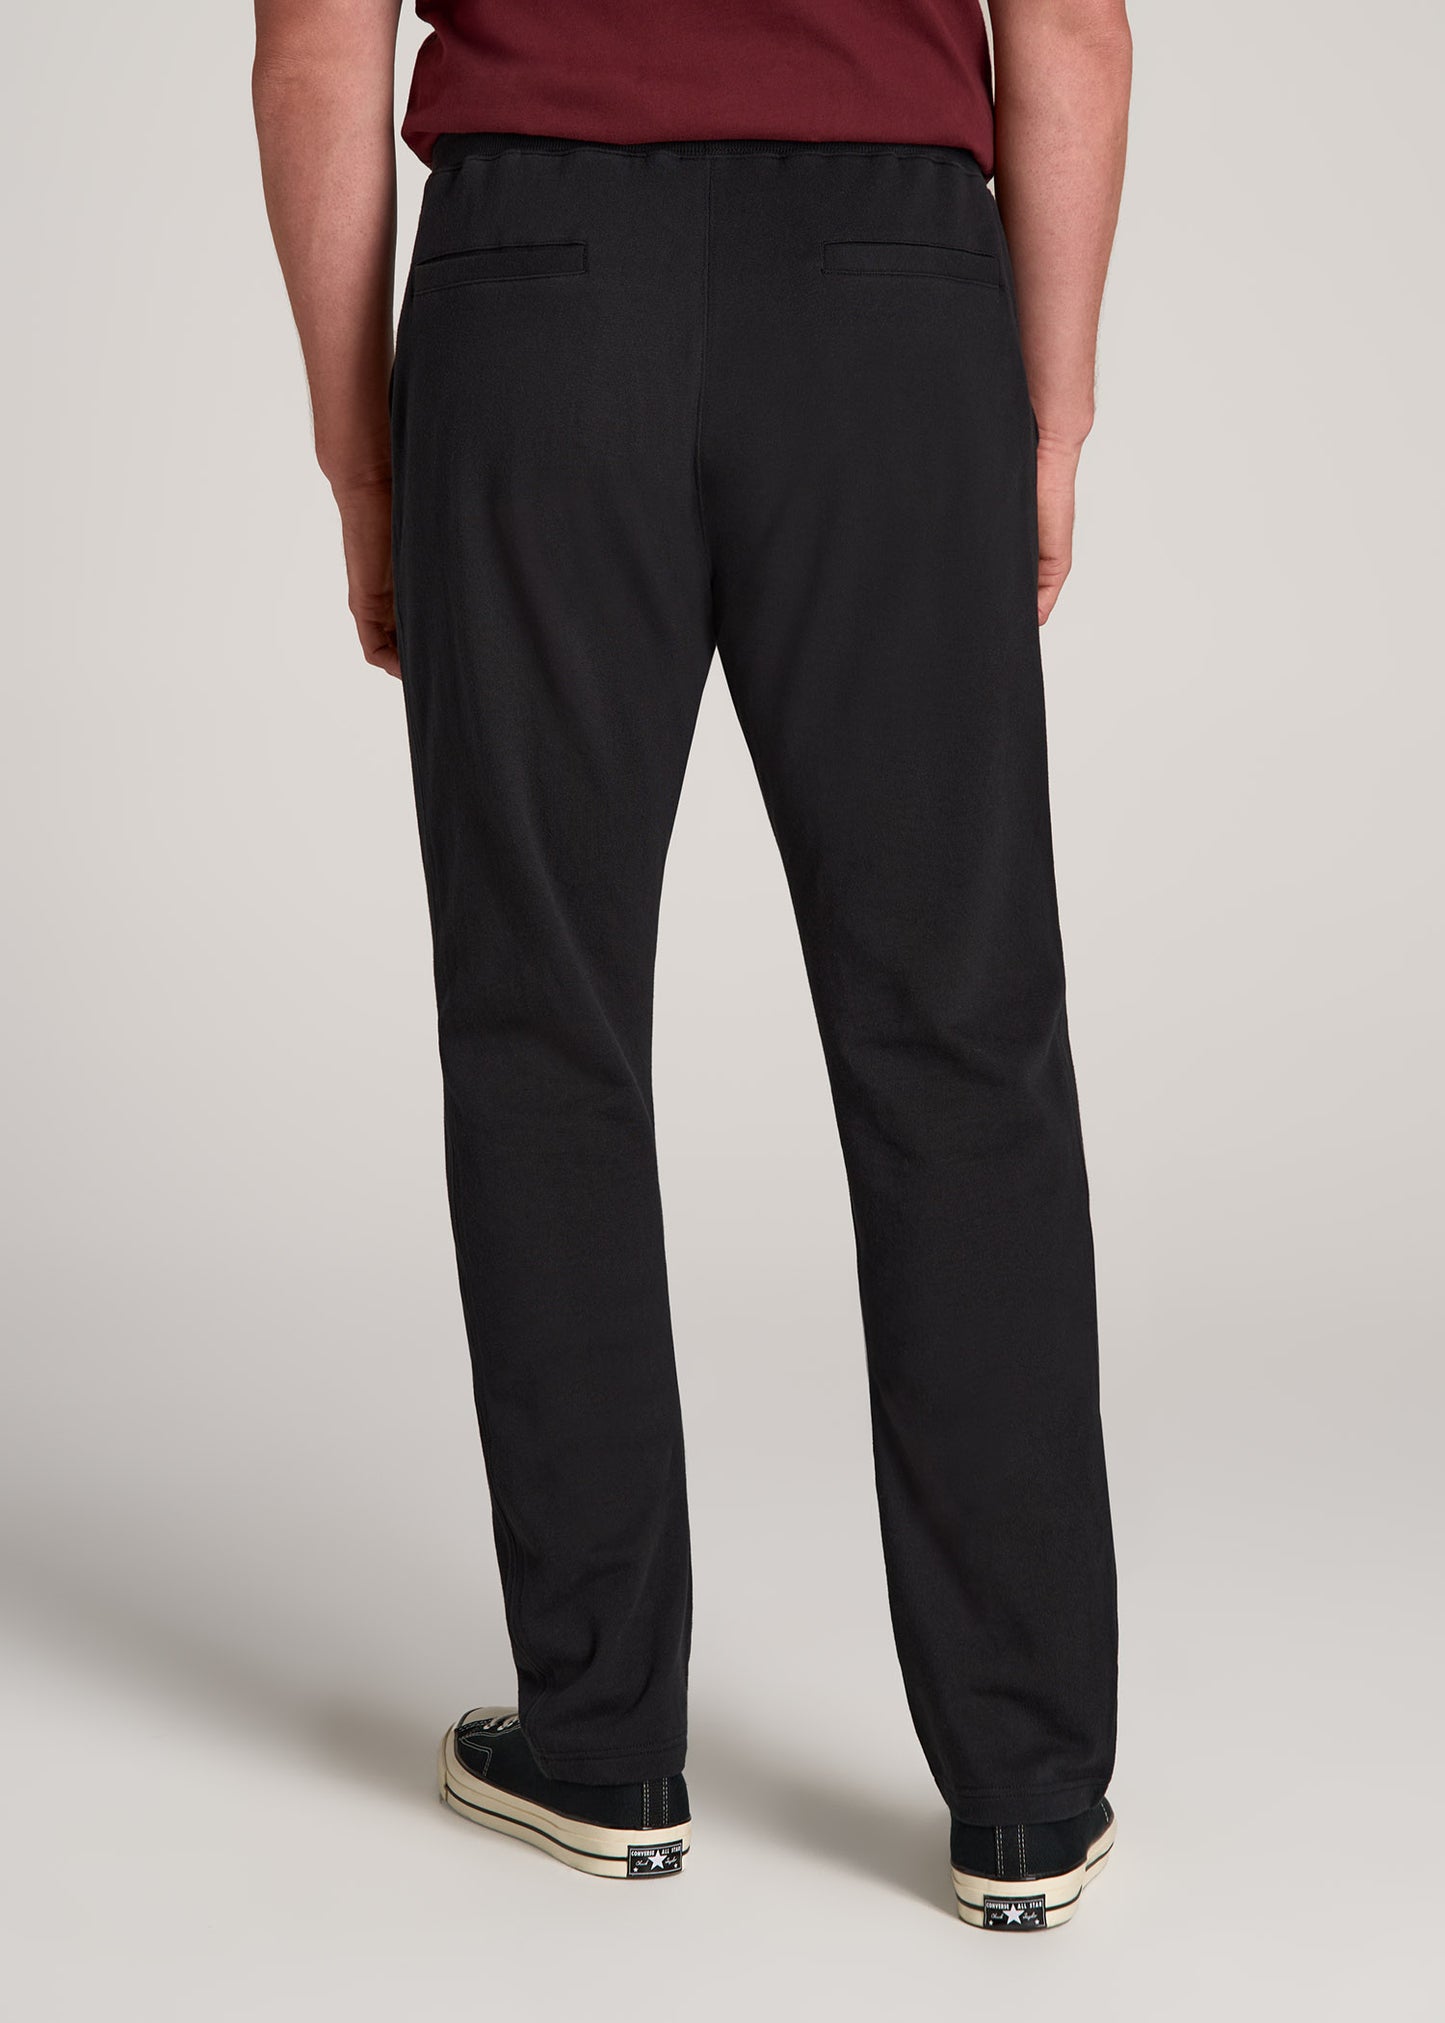 $220 Twenty Montreal Men's Black Knit Sunnyside Brushed Terry Pants Size  XXL